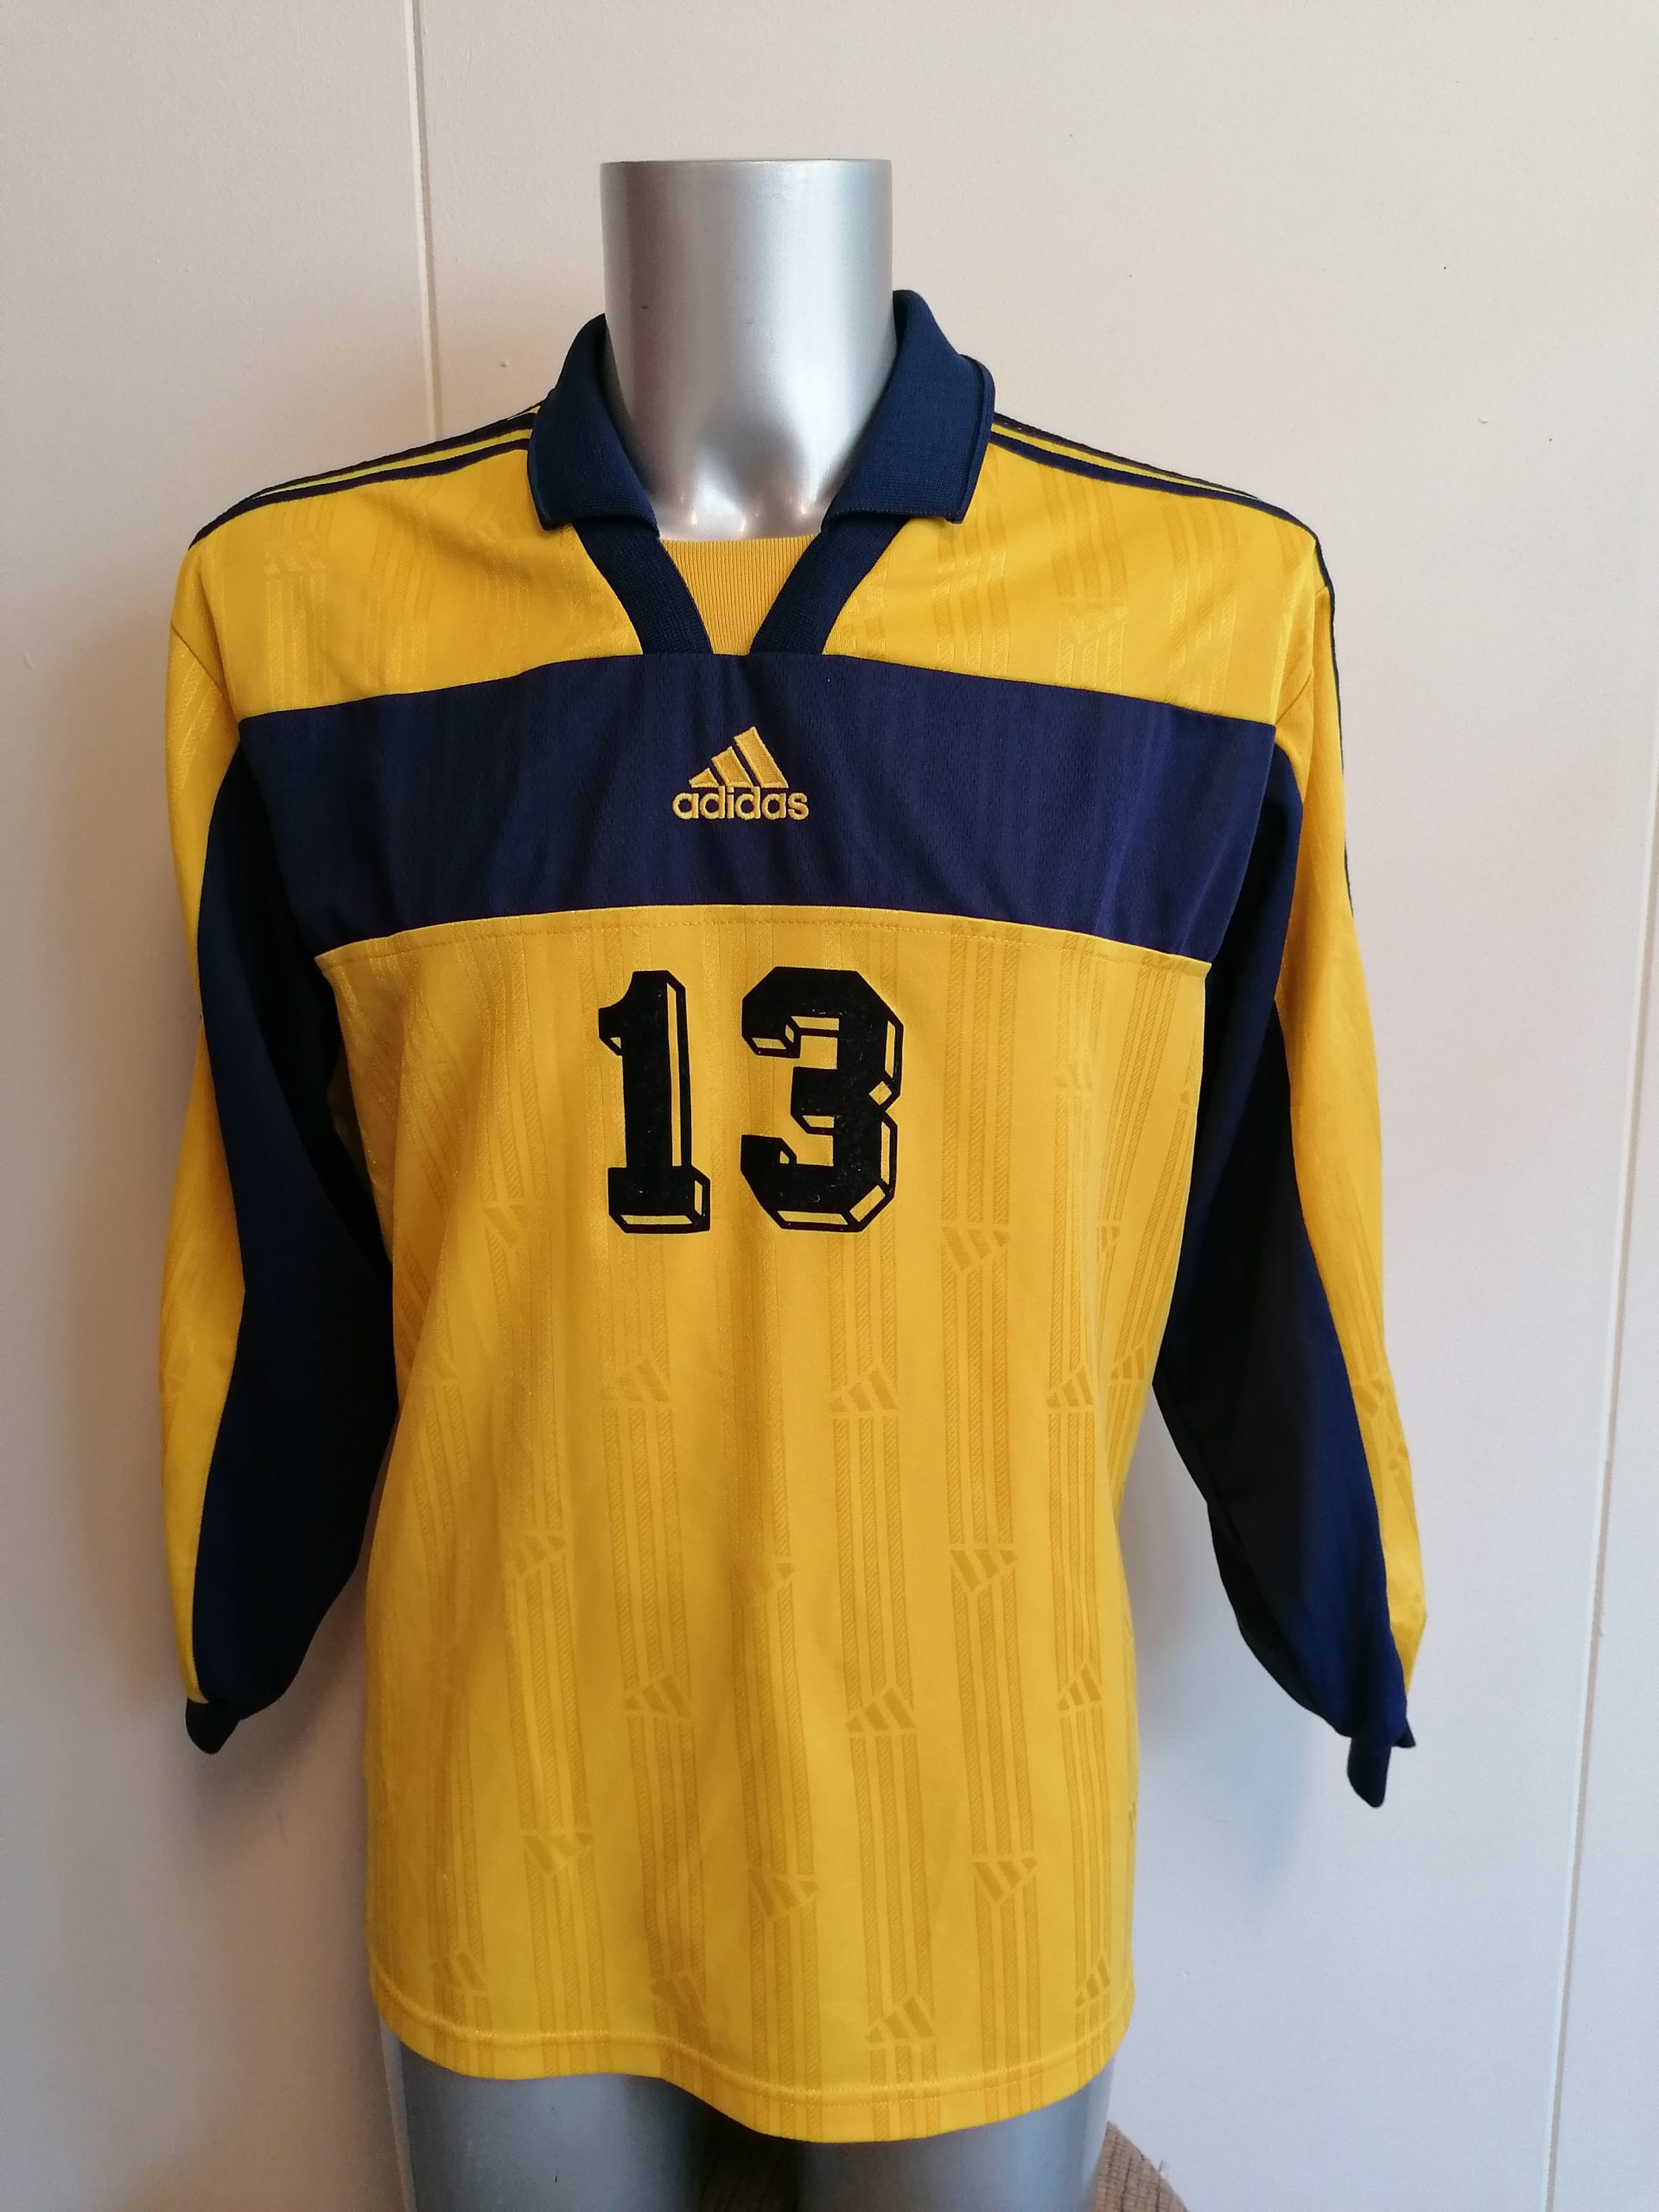 Vintage Adidas 2000 l/s yellow football shirt #13 size L